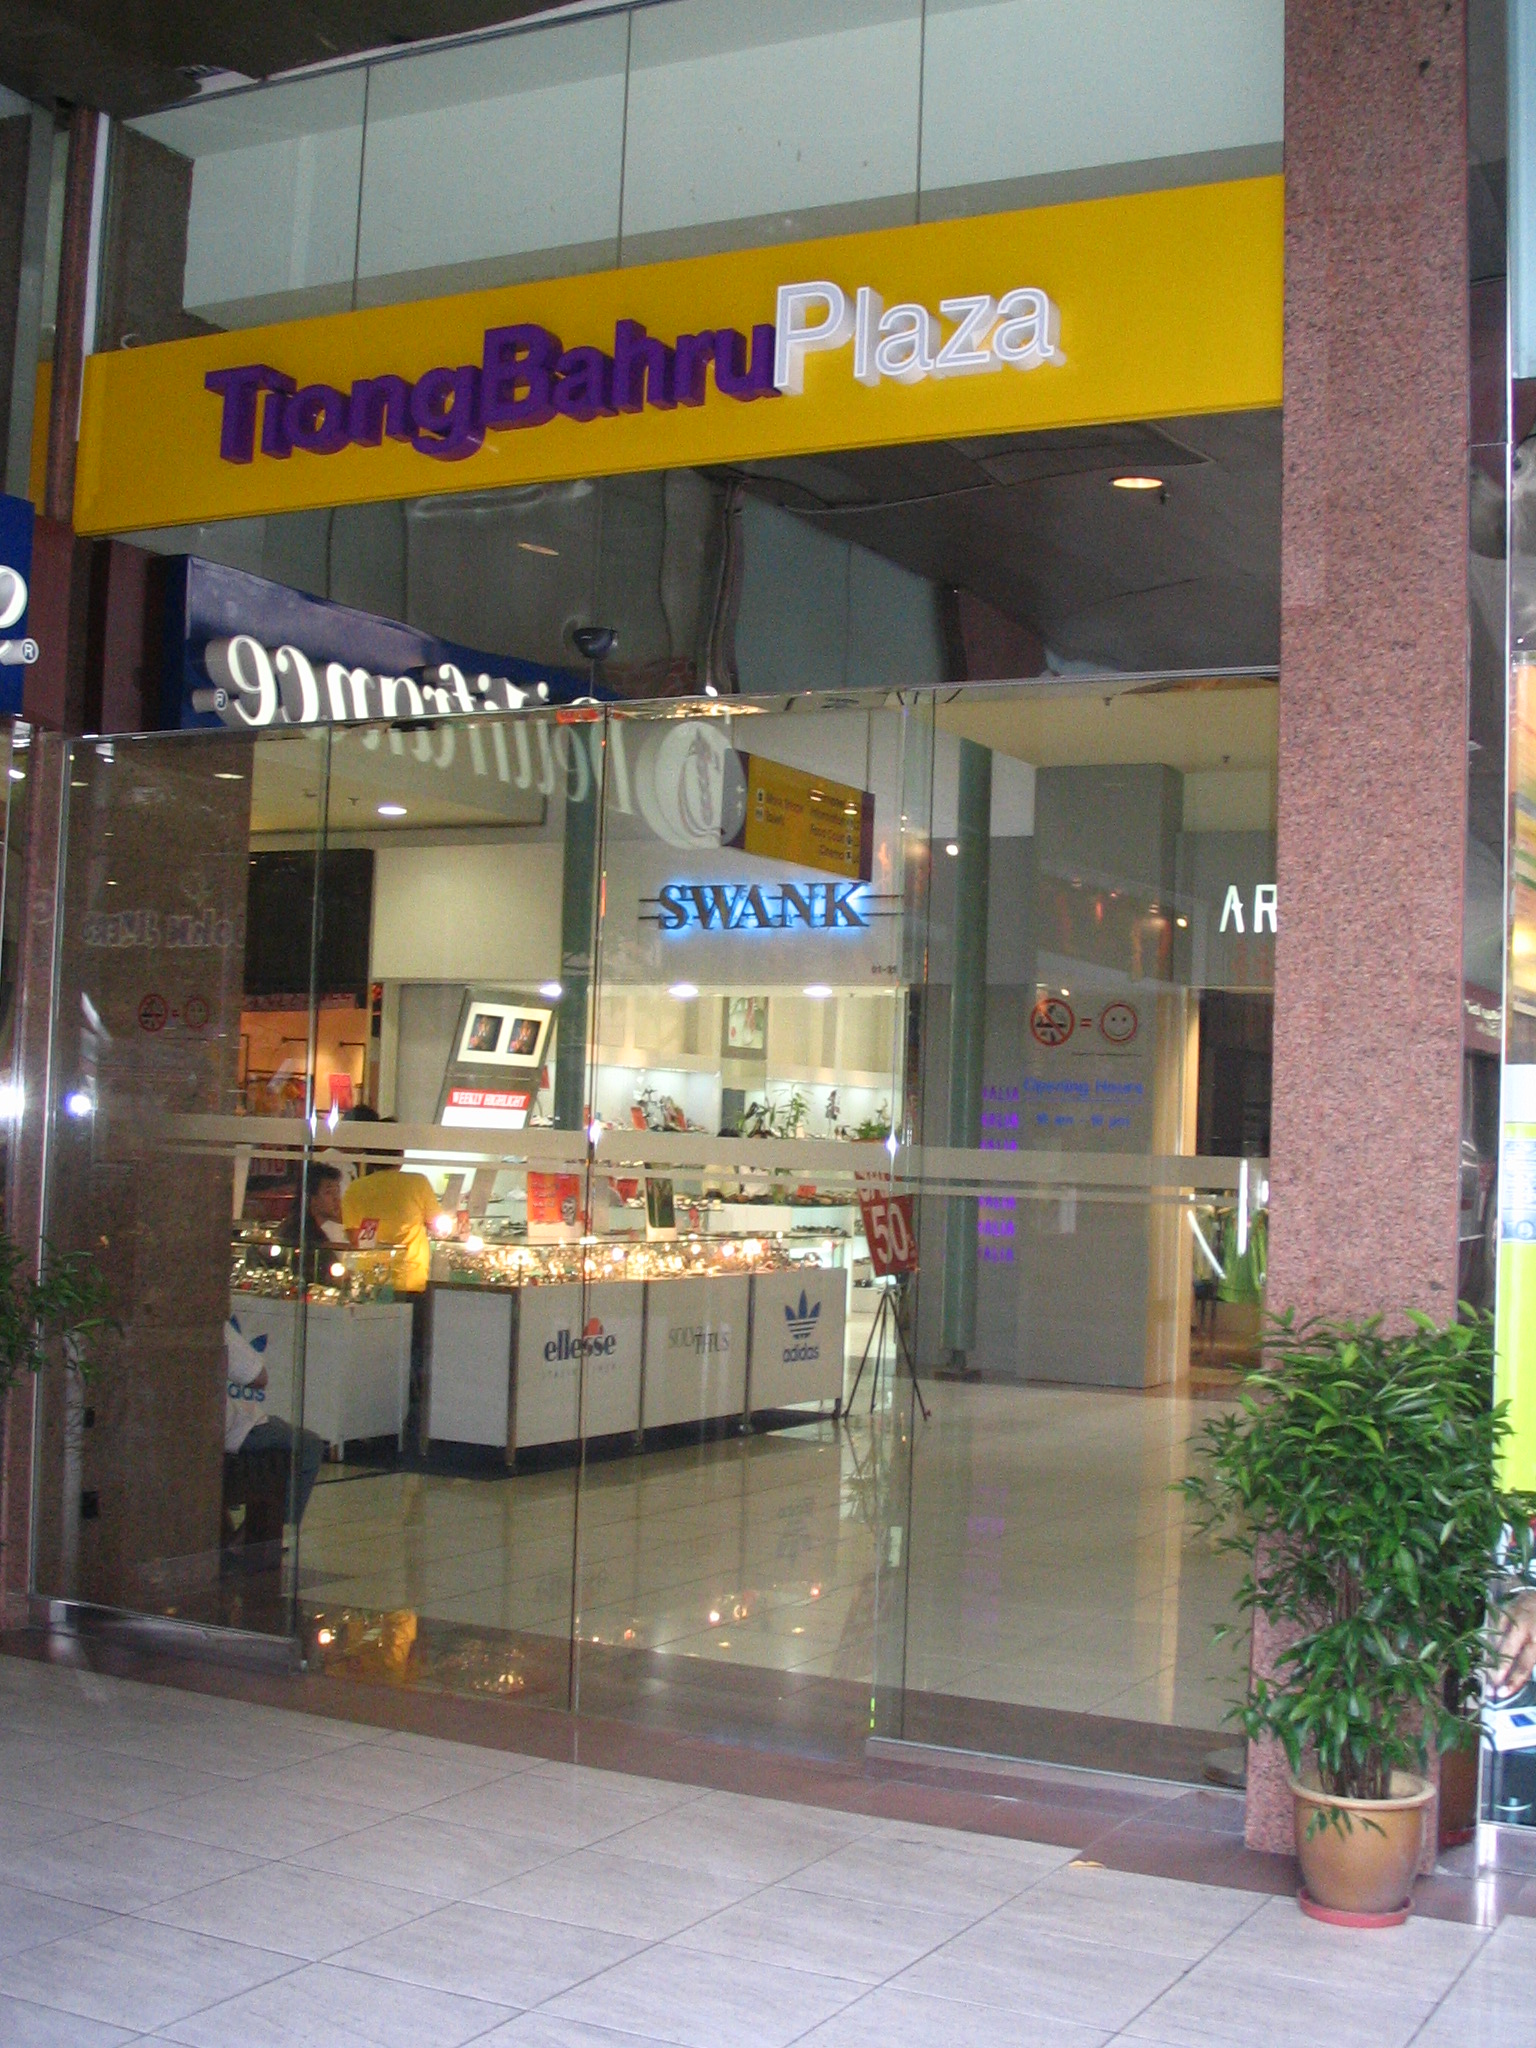 Tiong Bahru Plaza